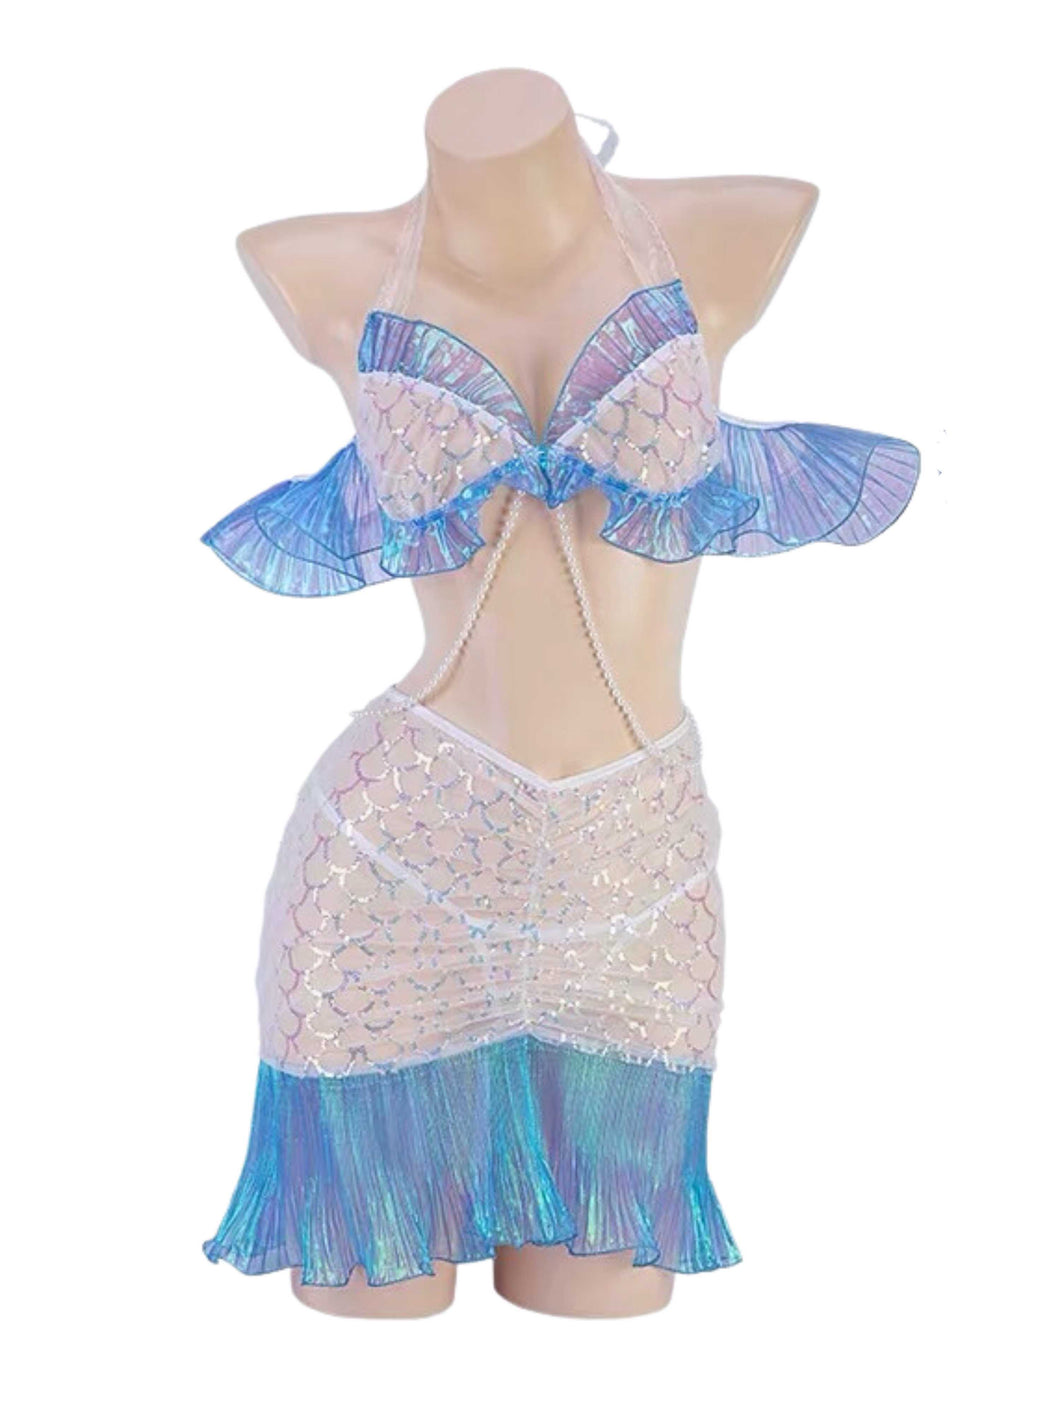 'Mermaid' Lace Reflective Ariel Costume Lingerie AlielNosirrah